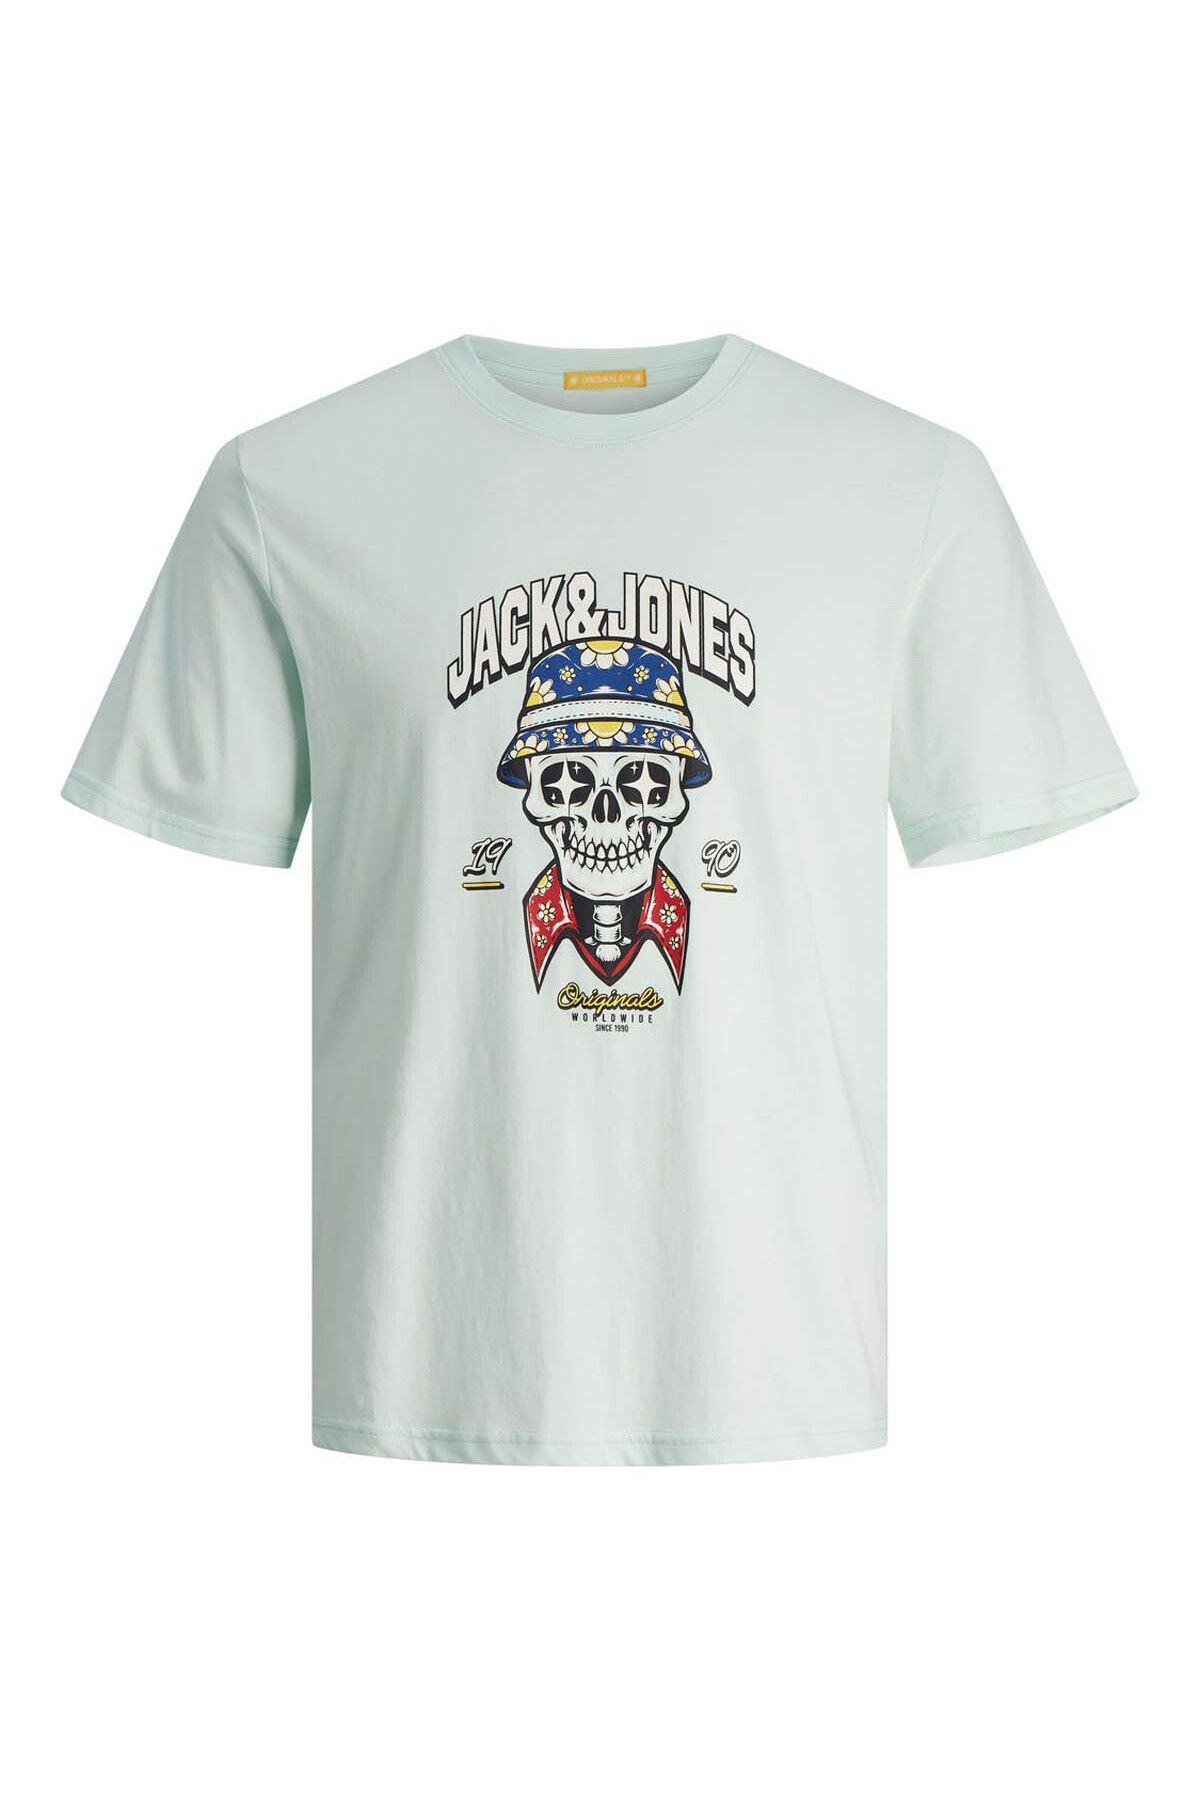 Jack & Jones Erkek T-shirt Mavi 12255192 Orcoconut Skull Tee Ss